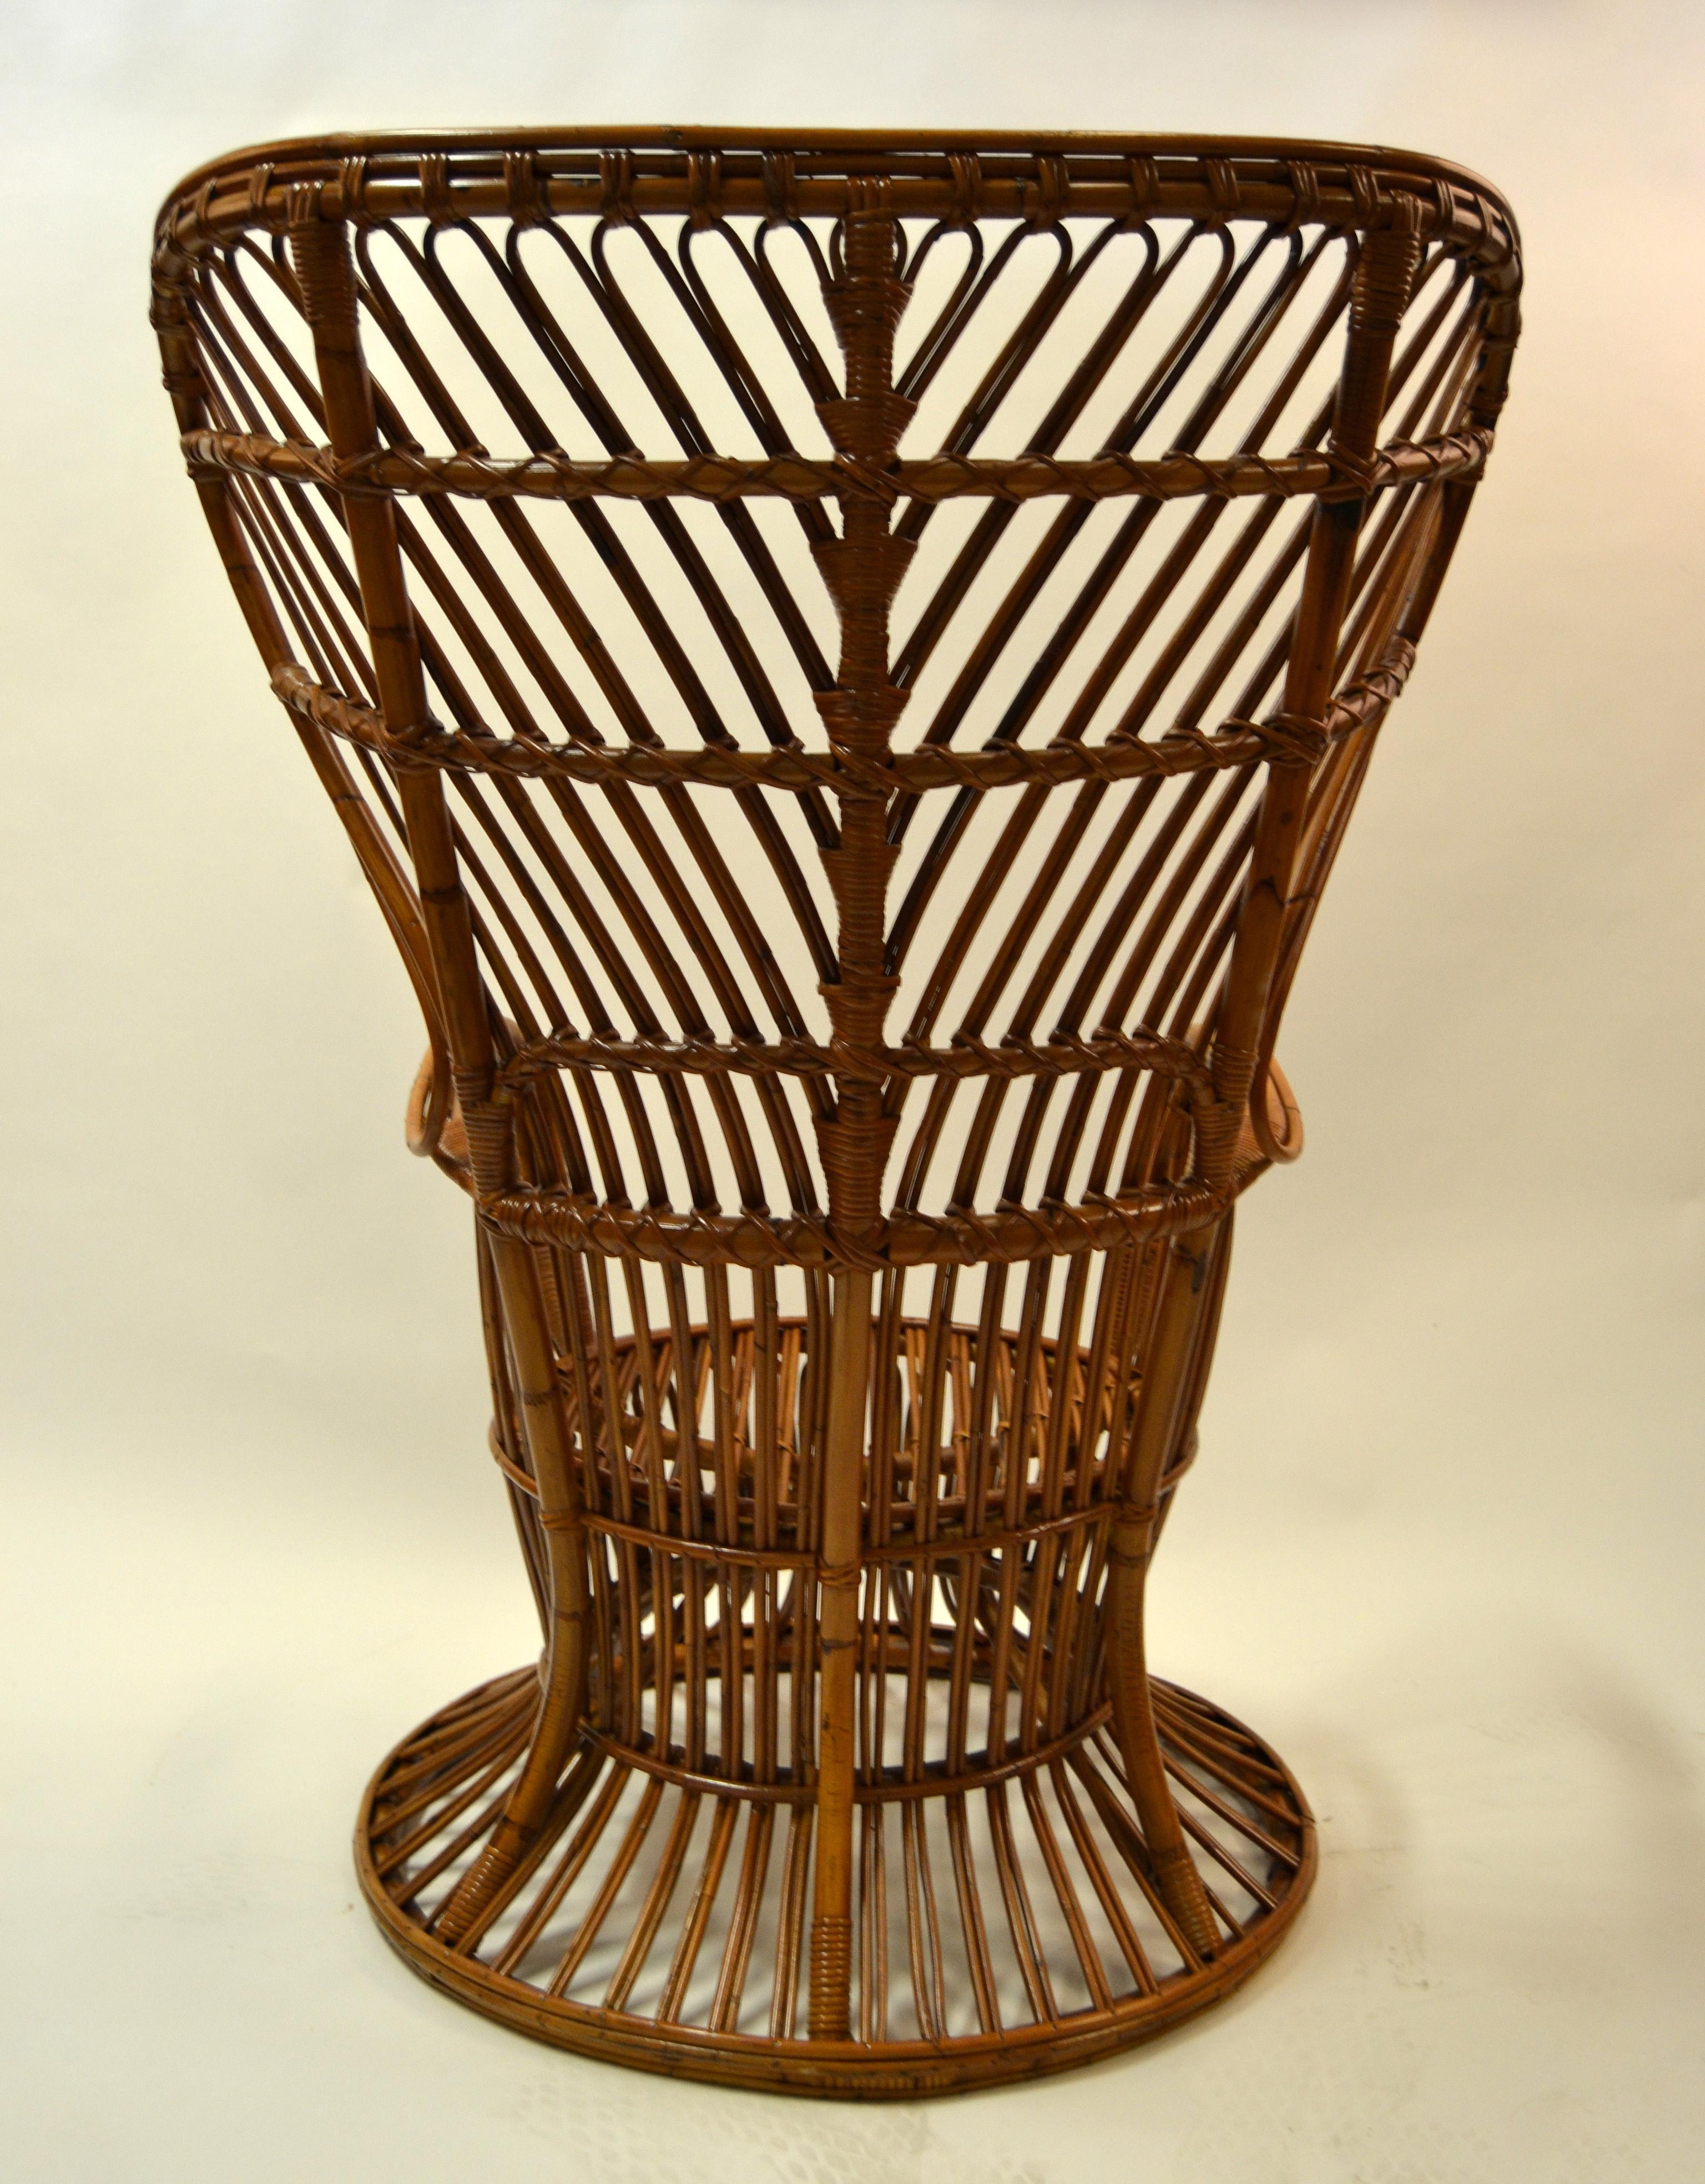 Italian Vintage Franco Albini Style Handwoven Rattan / Wicker High Back Chair, Italy